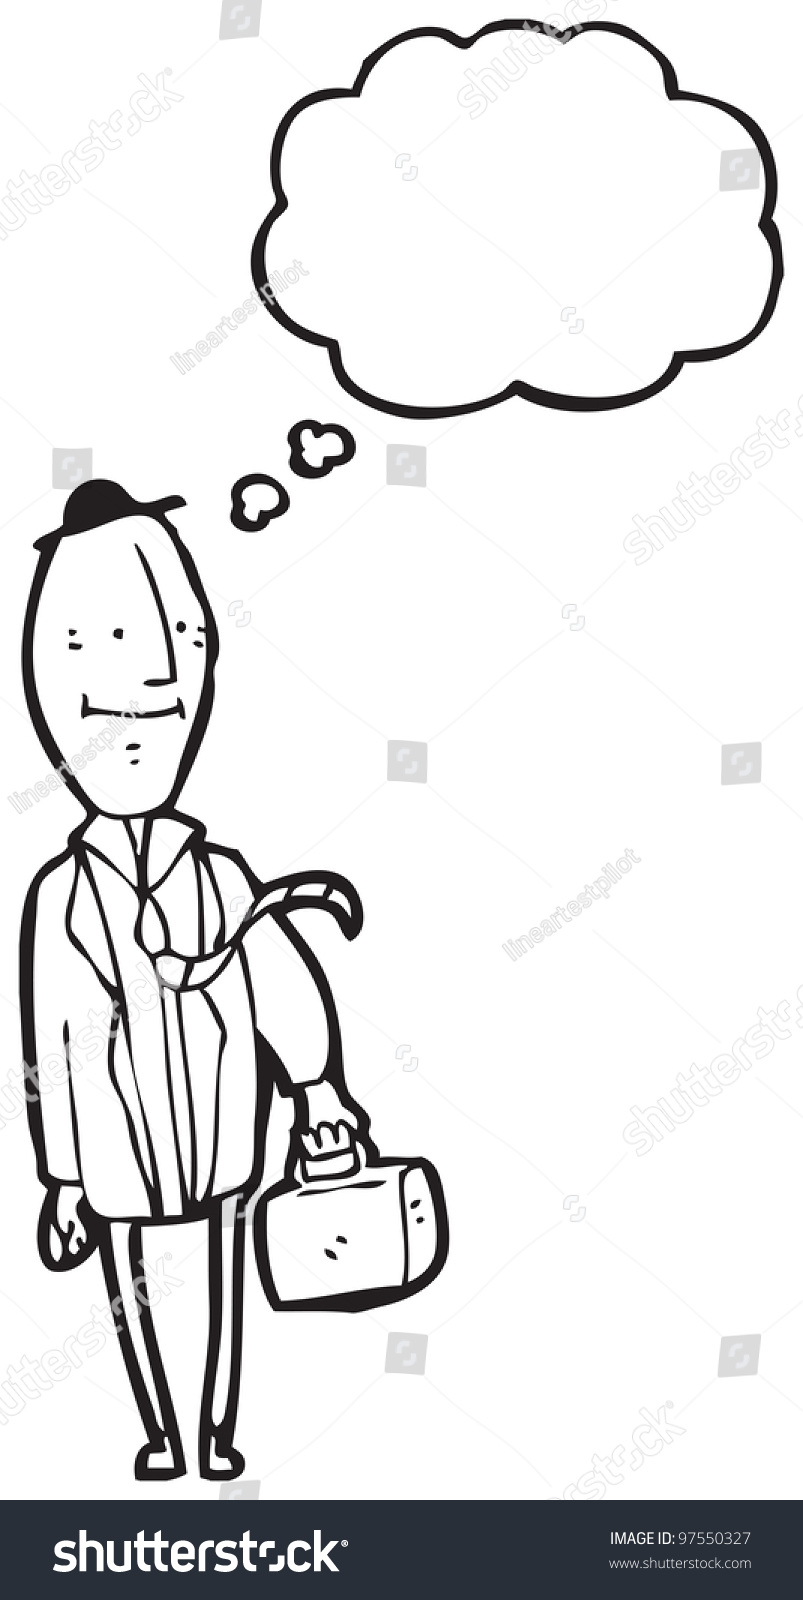 Boring Businessman Cartoon Stock Photo 97550327 : Shutterstock